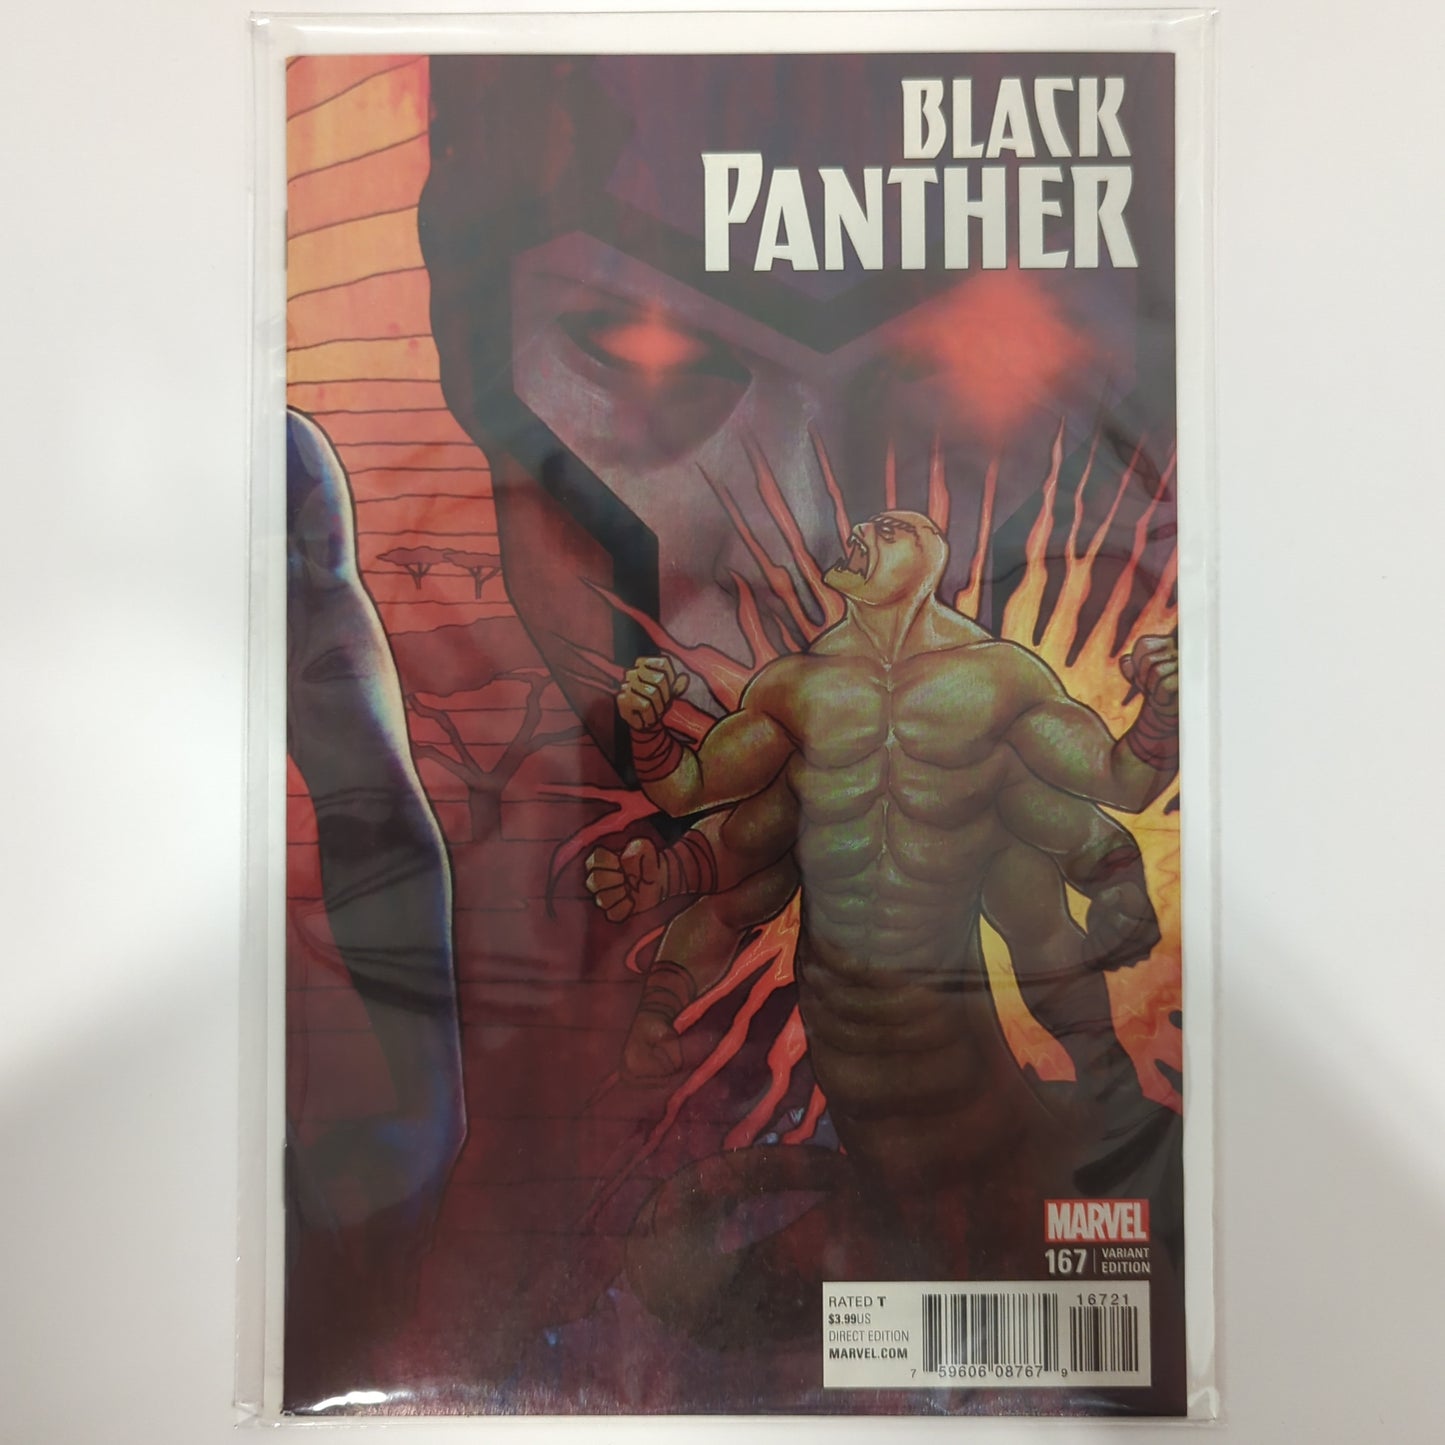 Black Panther #167 variant